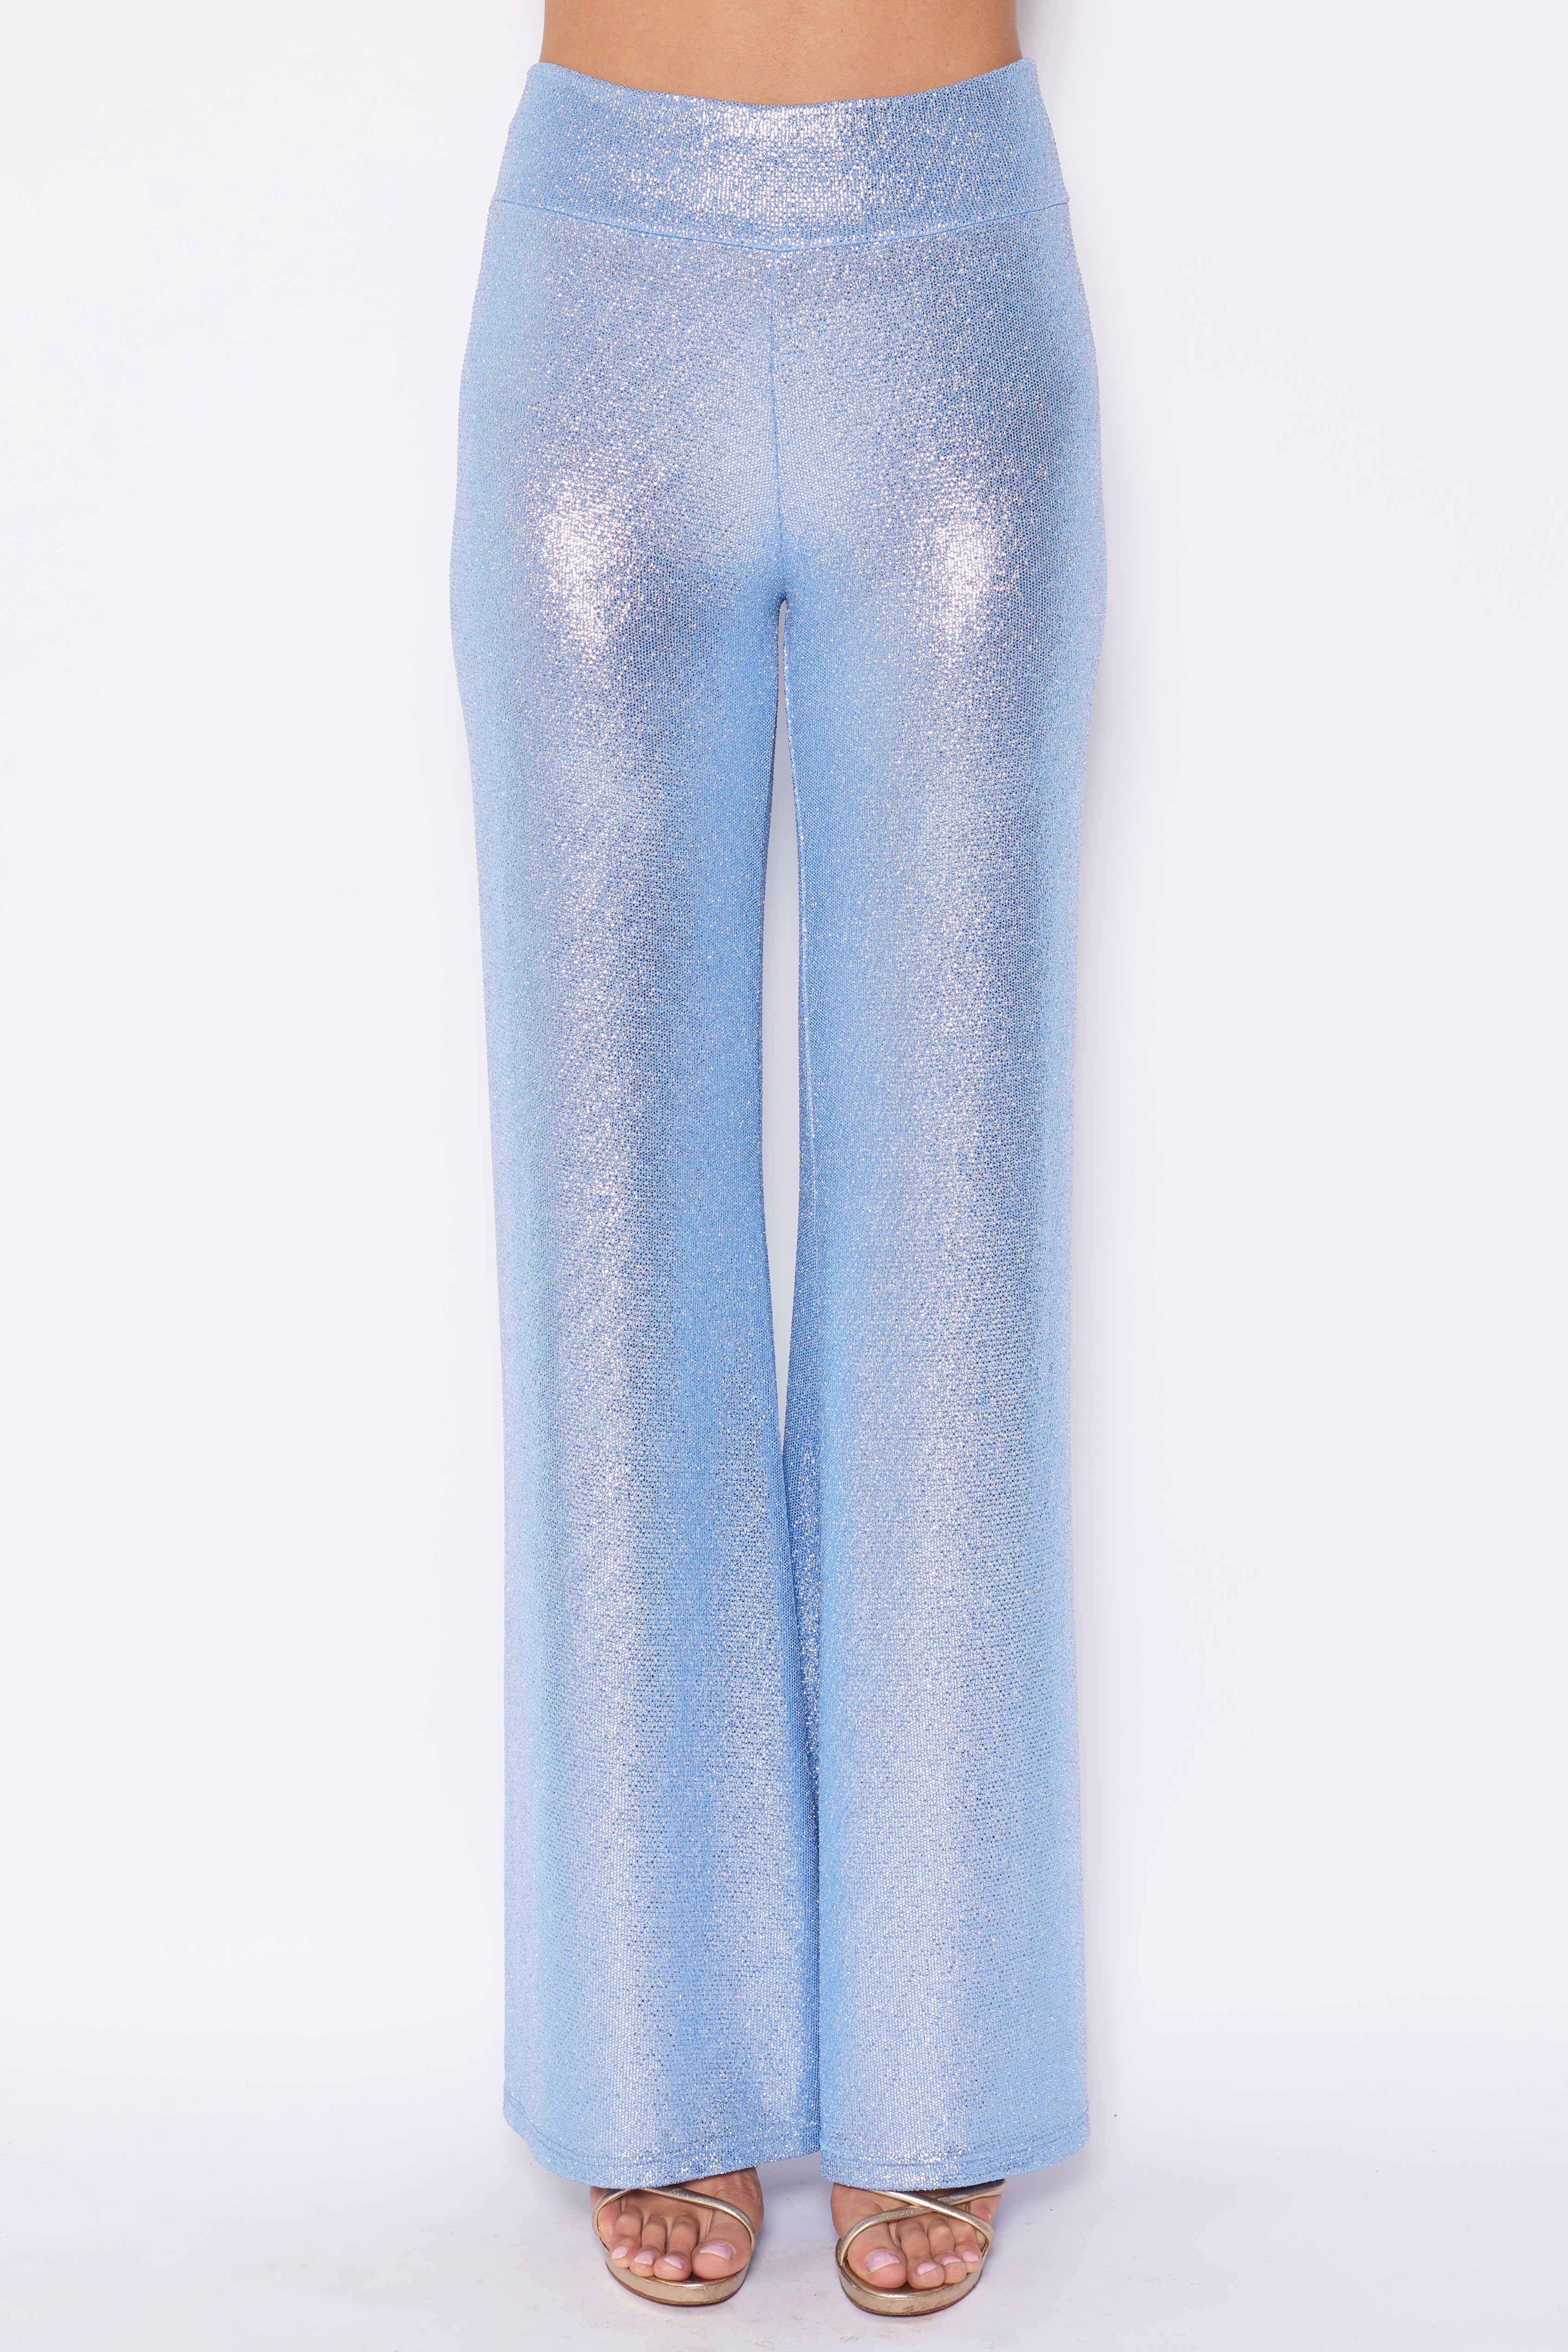 MIMI - blue lurex palazzo pants